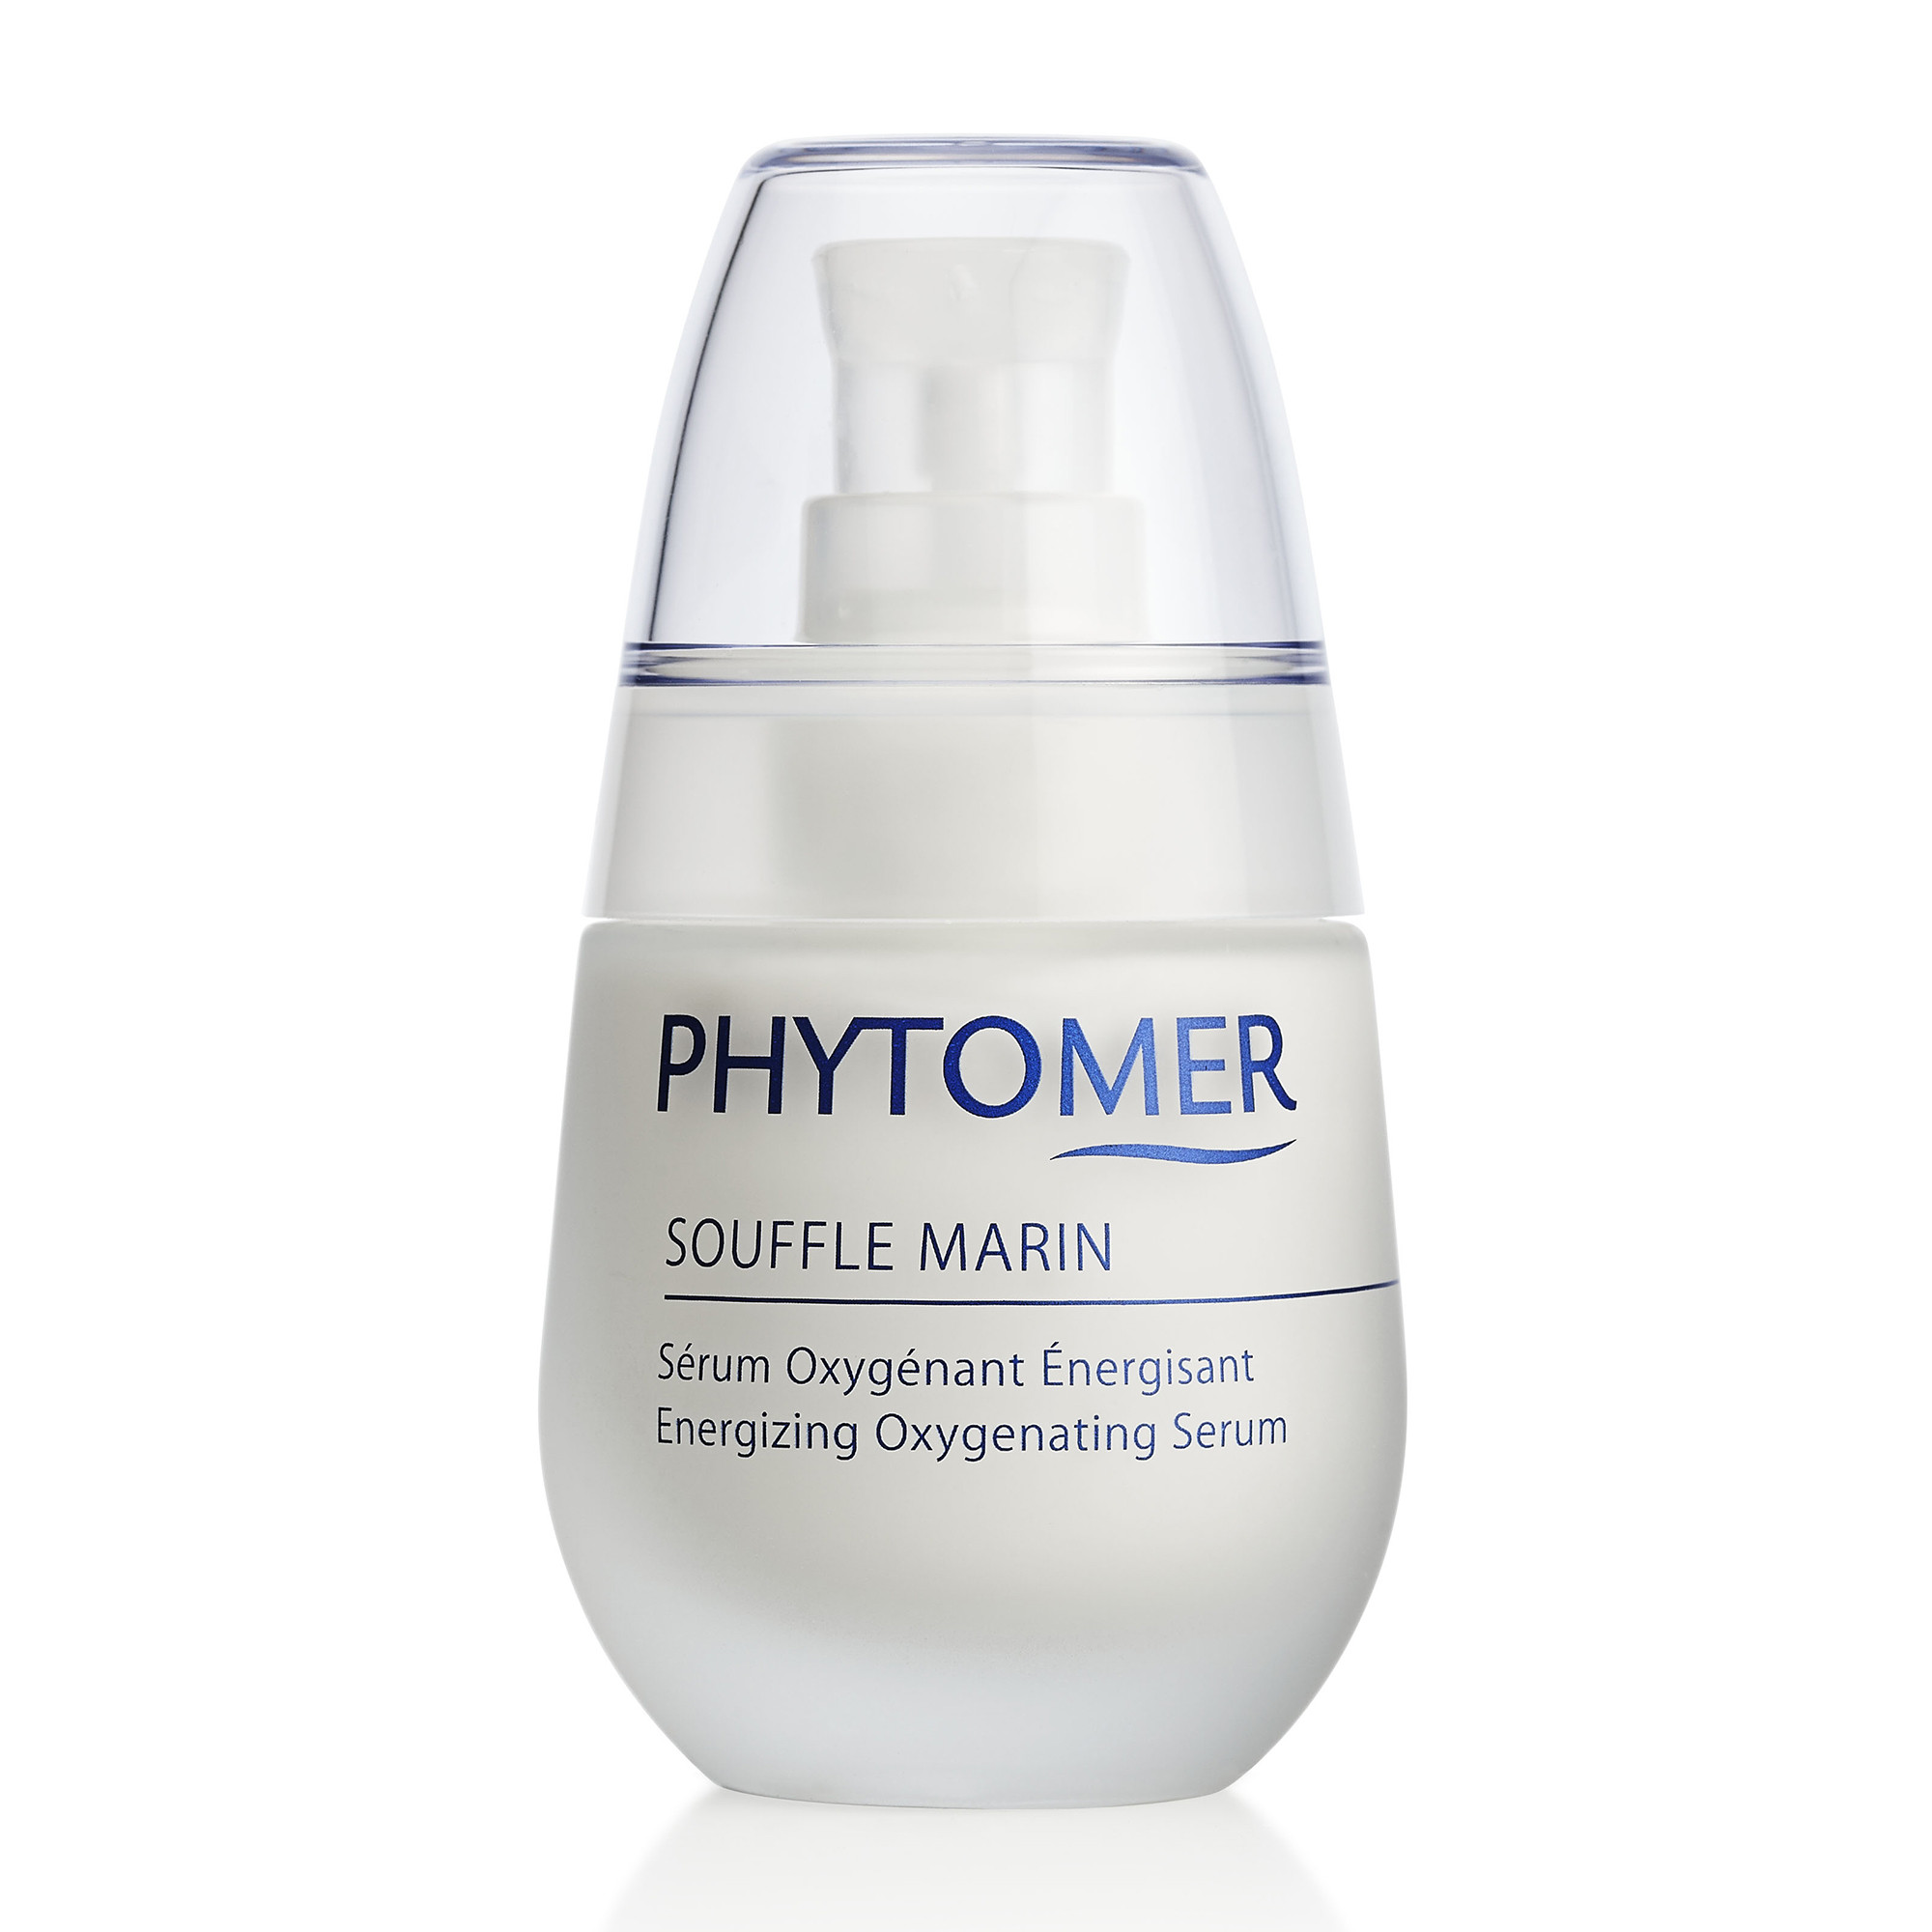 Відгуки про Phytomer Souffle Marin Energizing Oxygenating Serum Сыворотка оксигенирующая